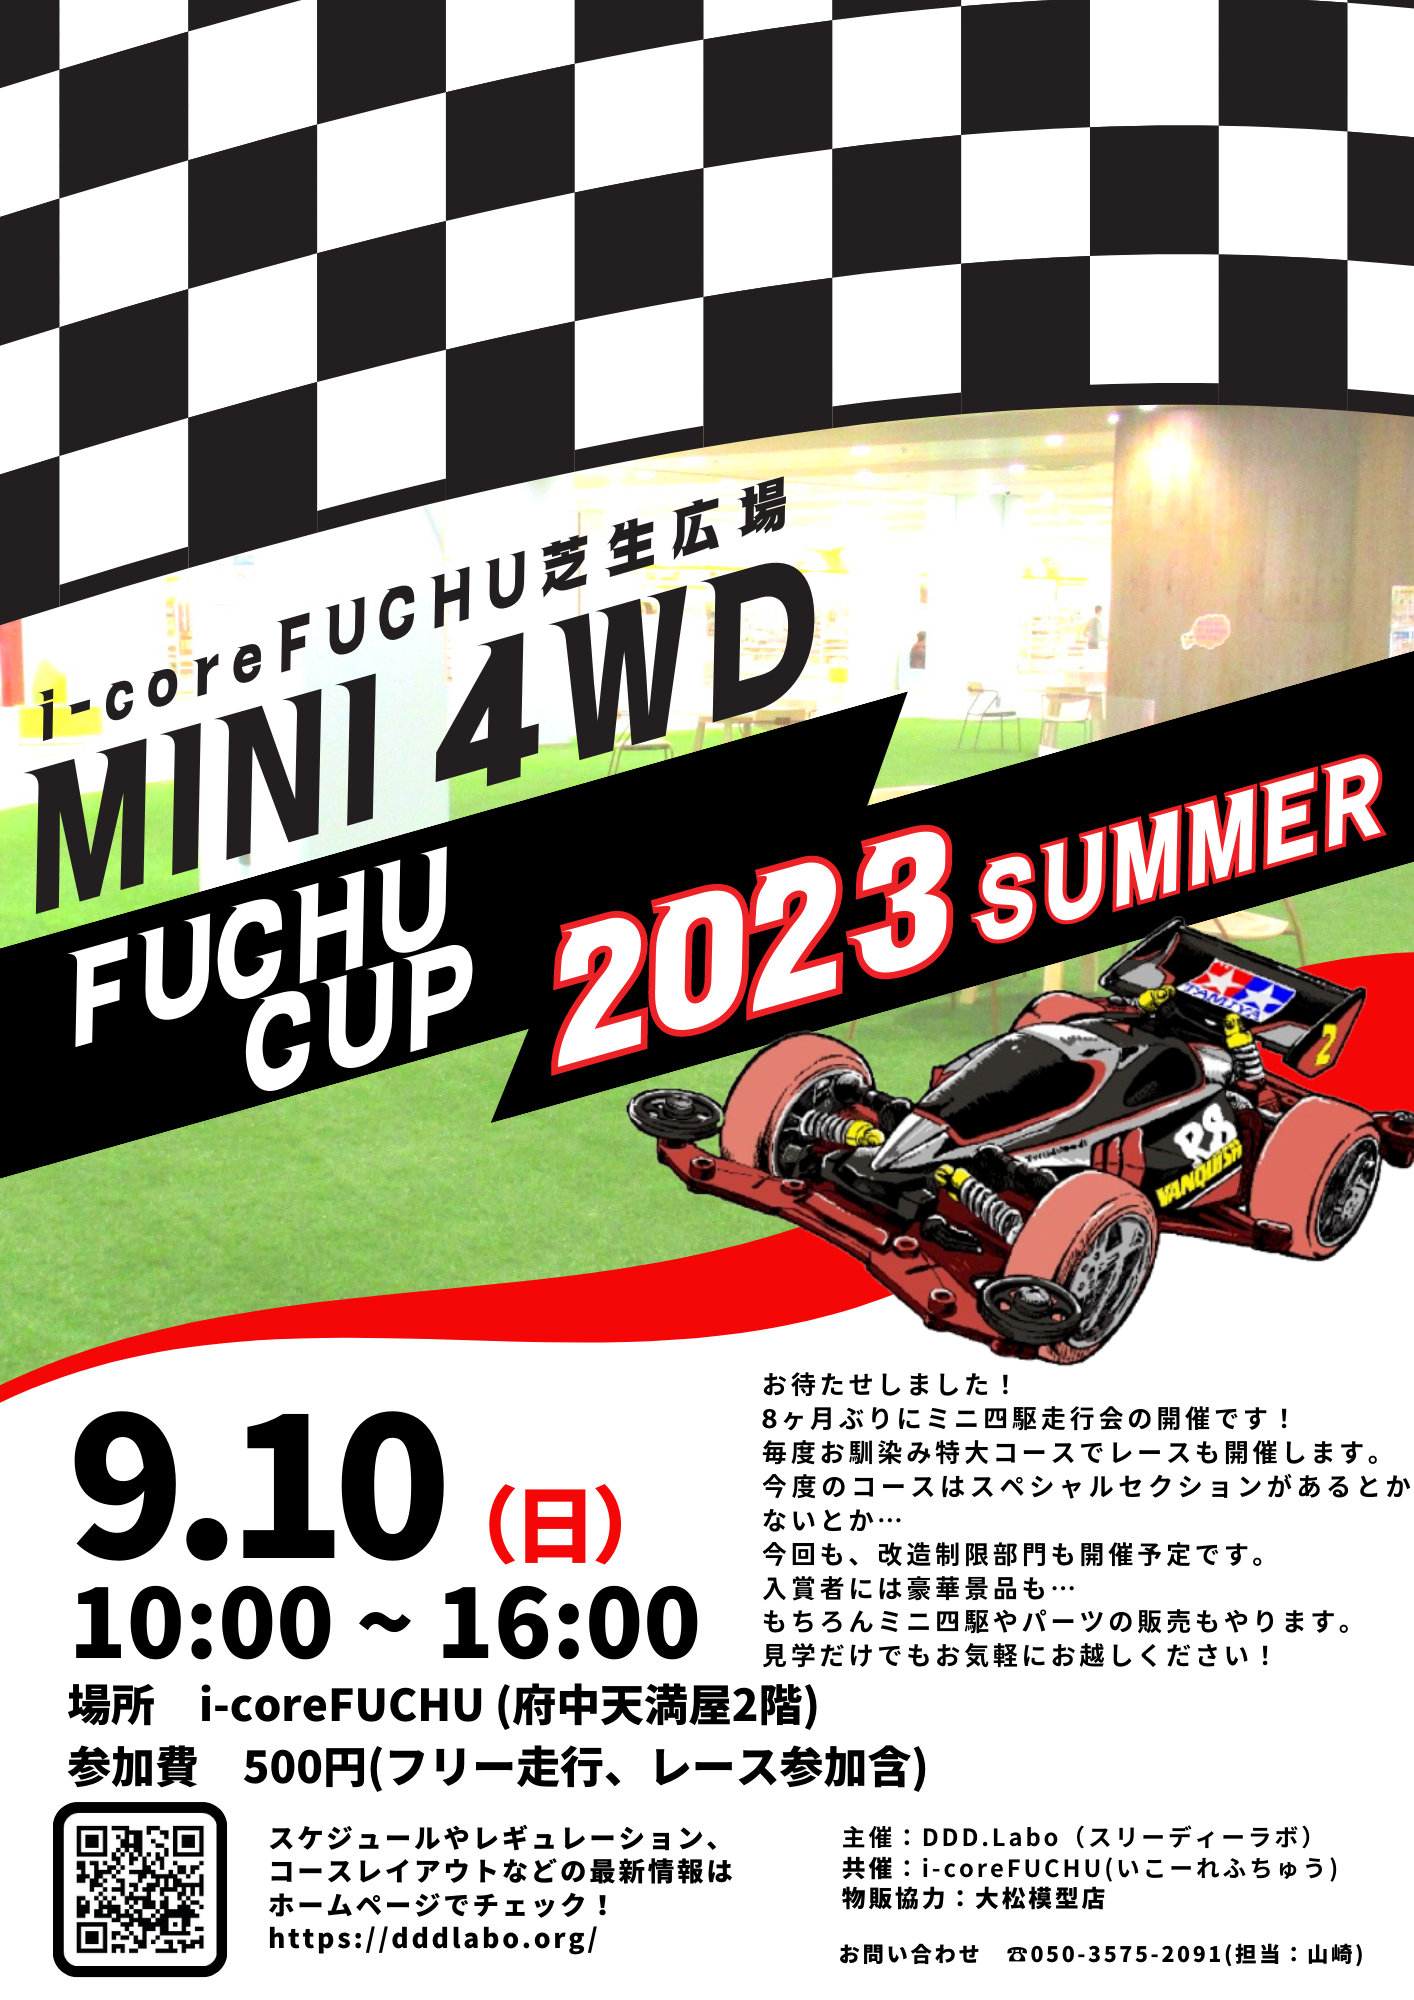 「i-coreFUCHU芝生広場 ミニ四駆 FUCHU CUP 2023 SUMMER」の画像